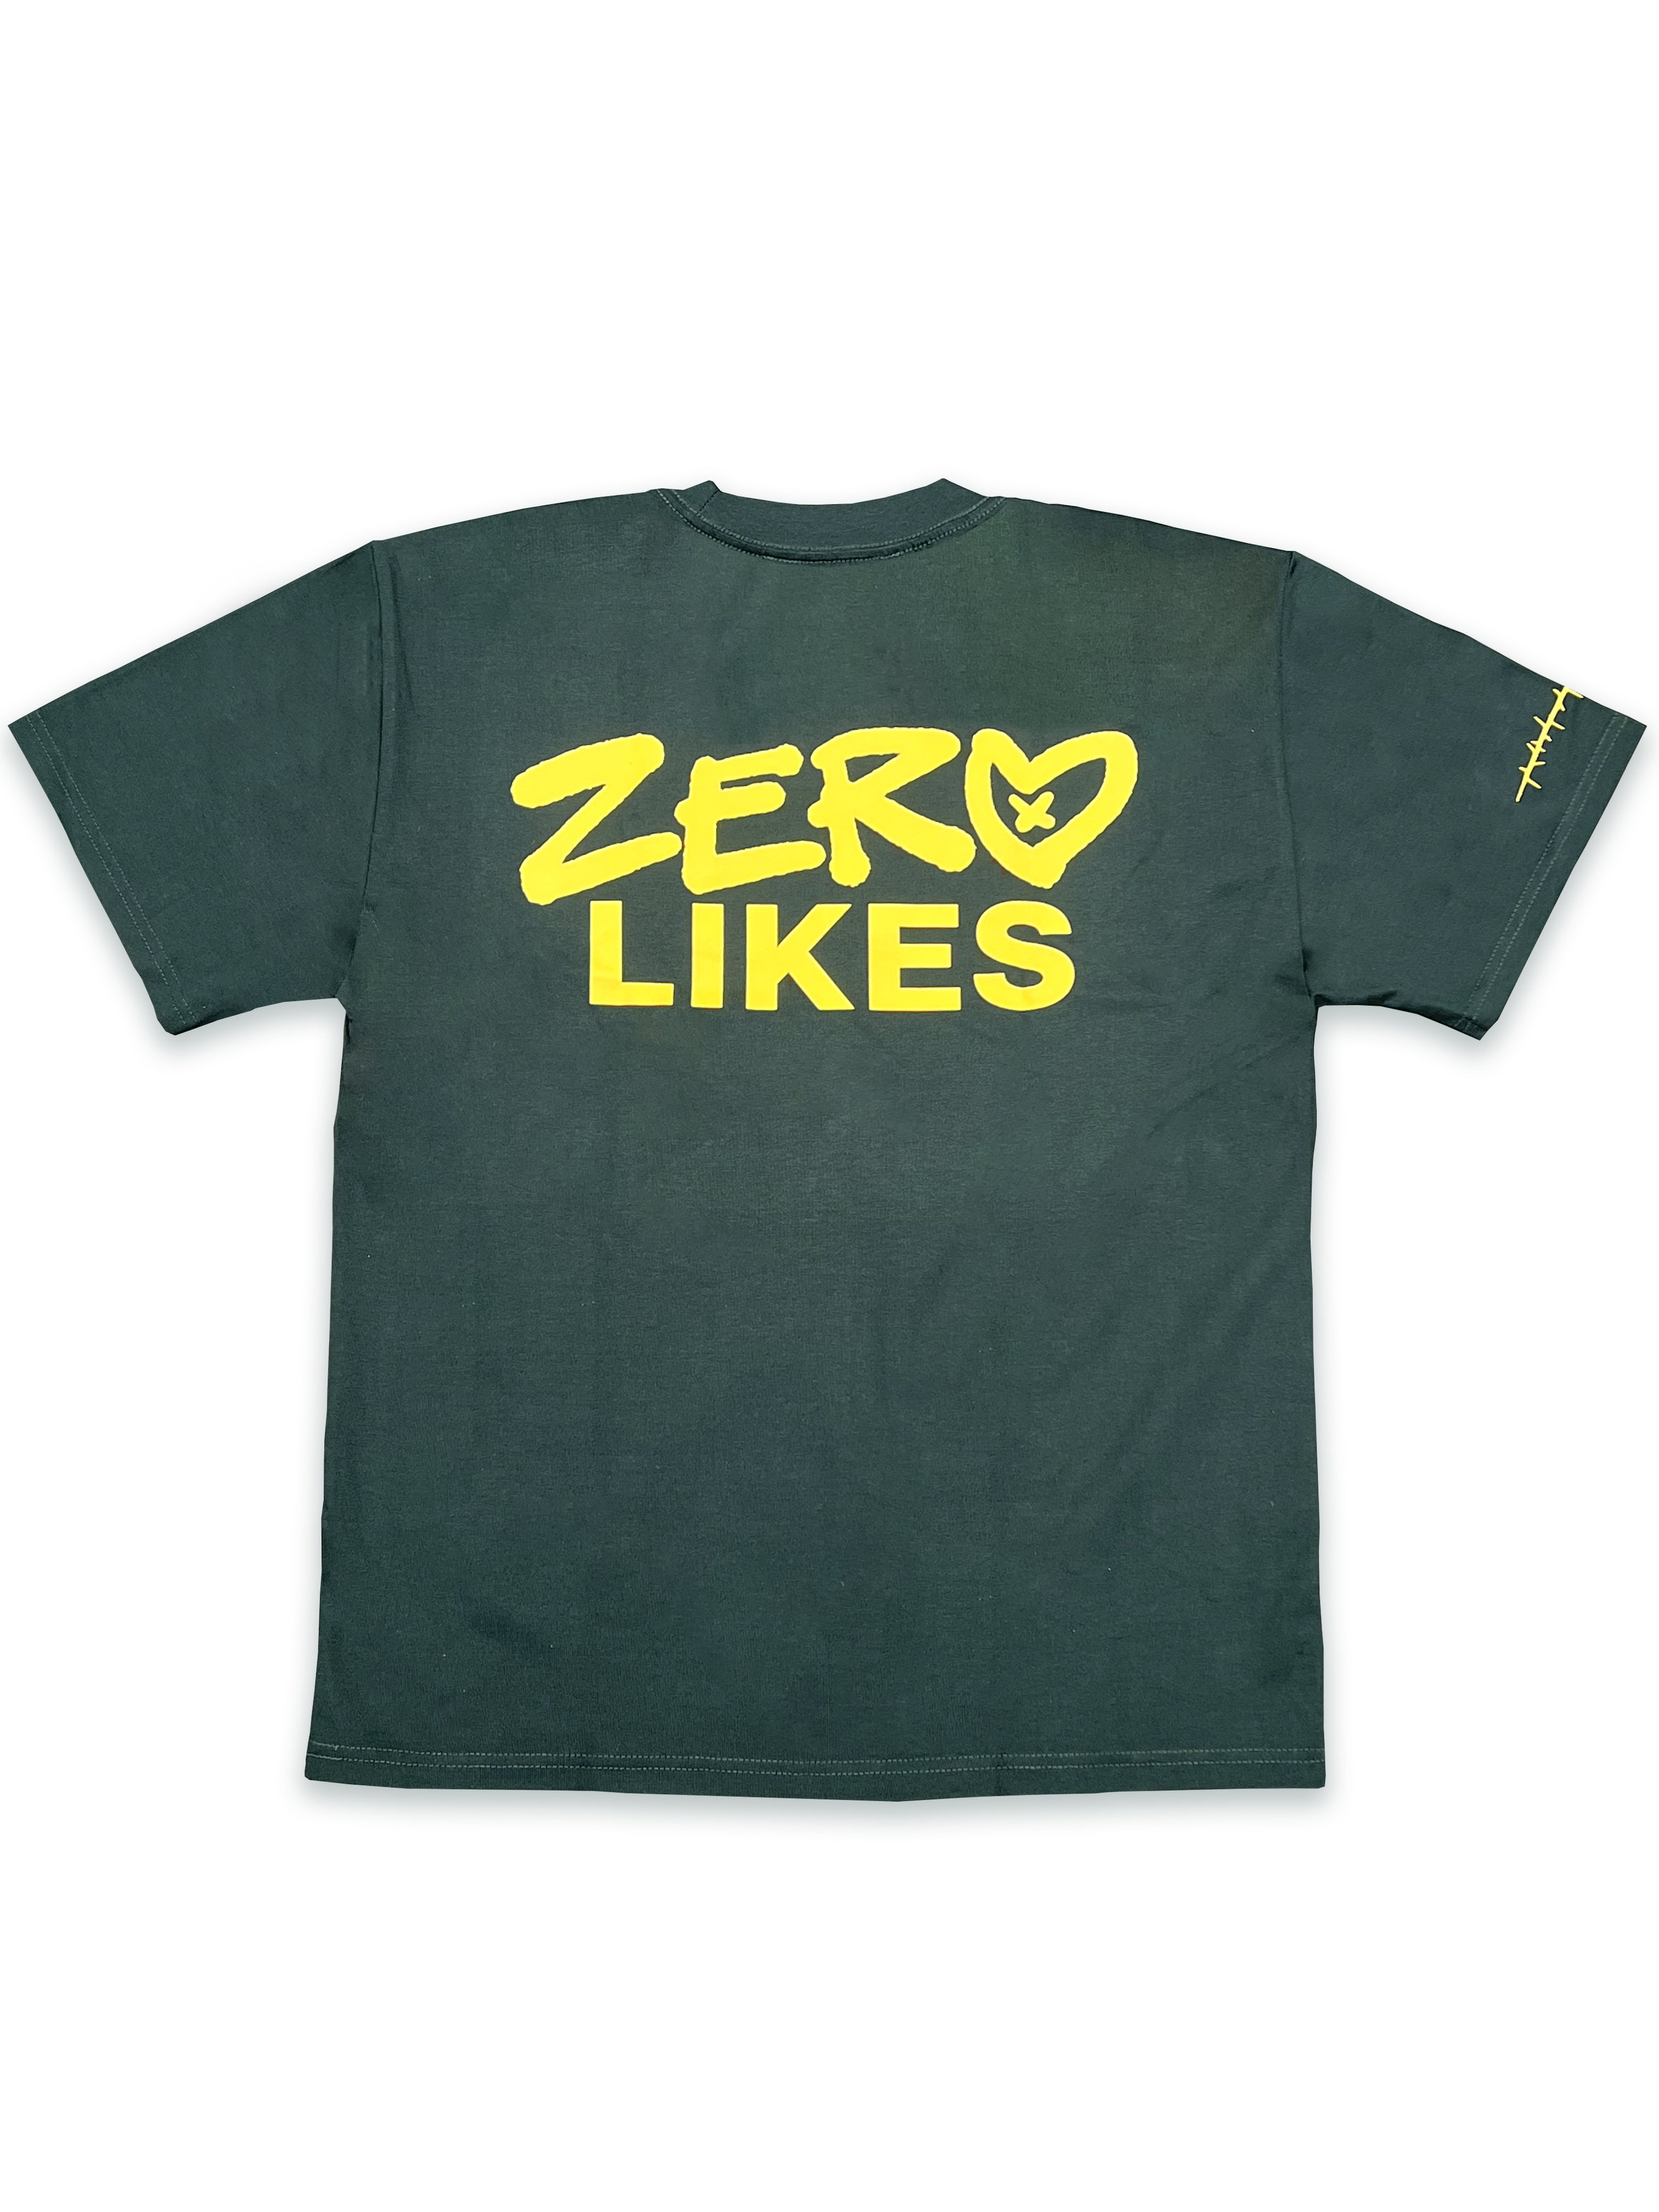 Øriginal Tee (Green/Yellow) > Zero Likes